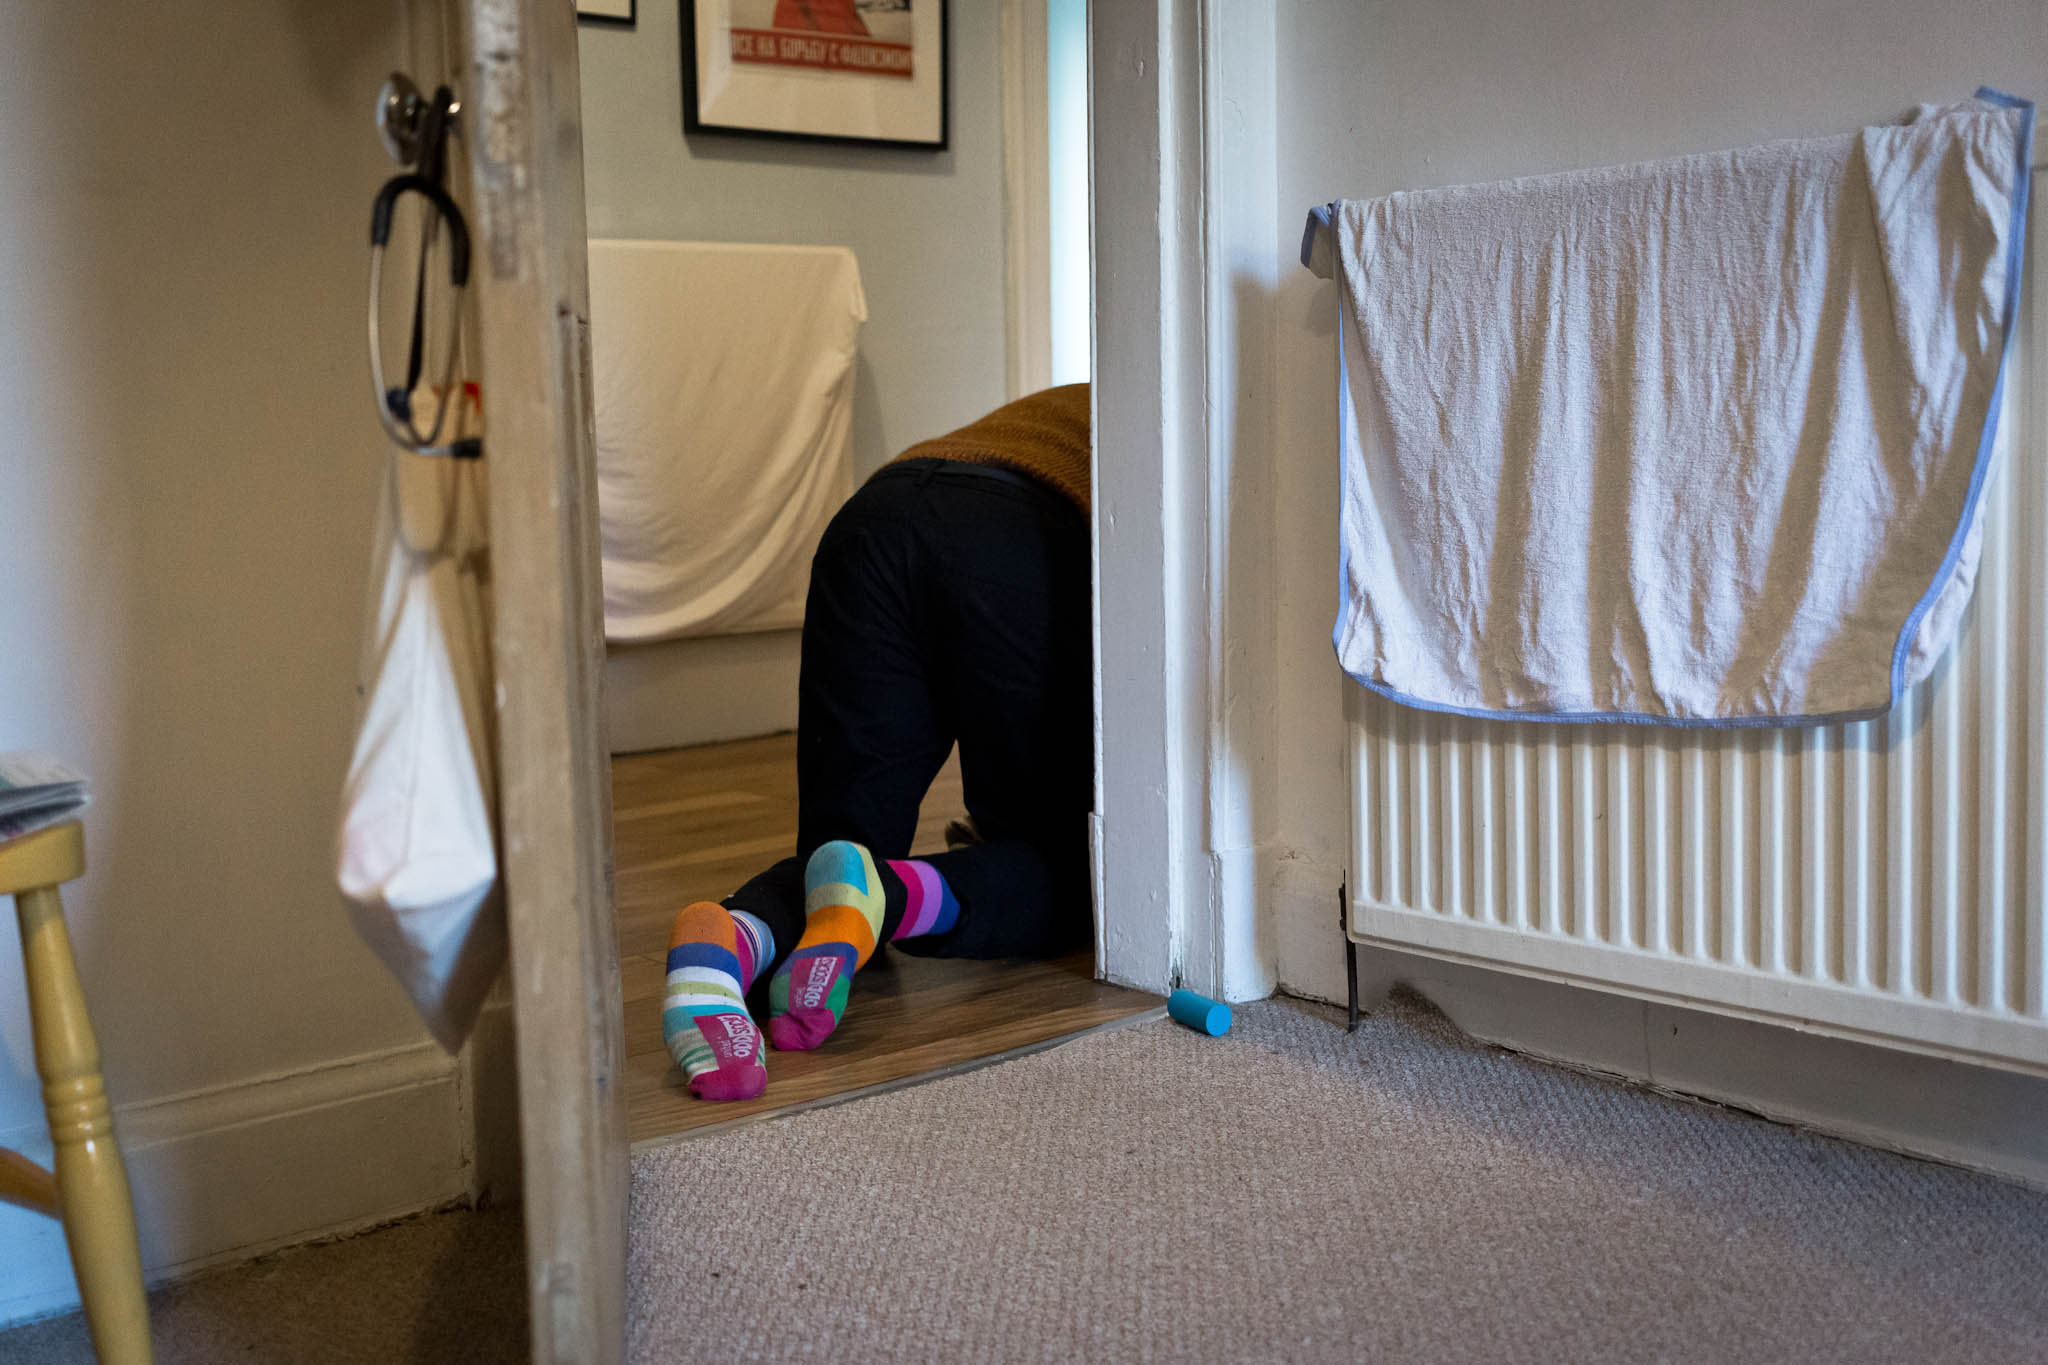 Feet in colourful socks seen crawling away through a doorway following baby